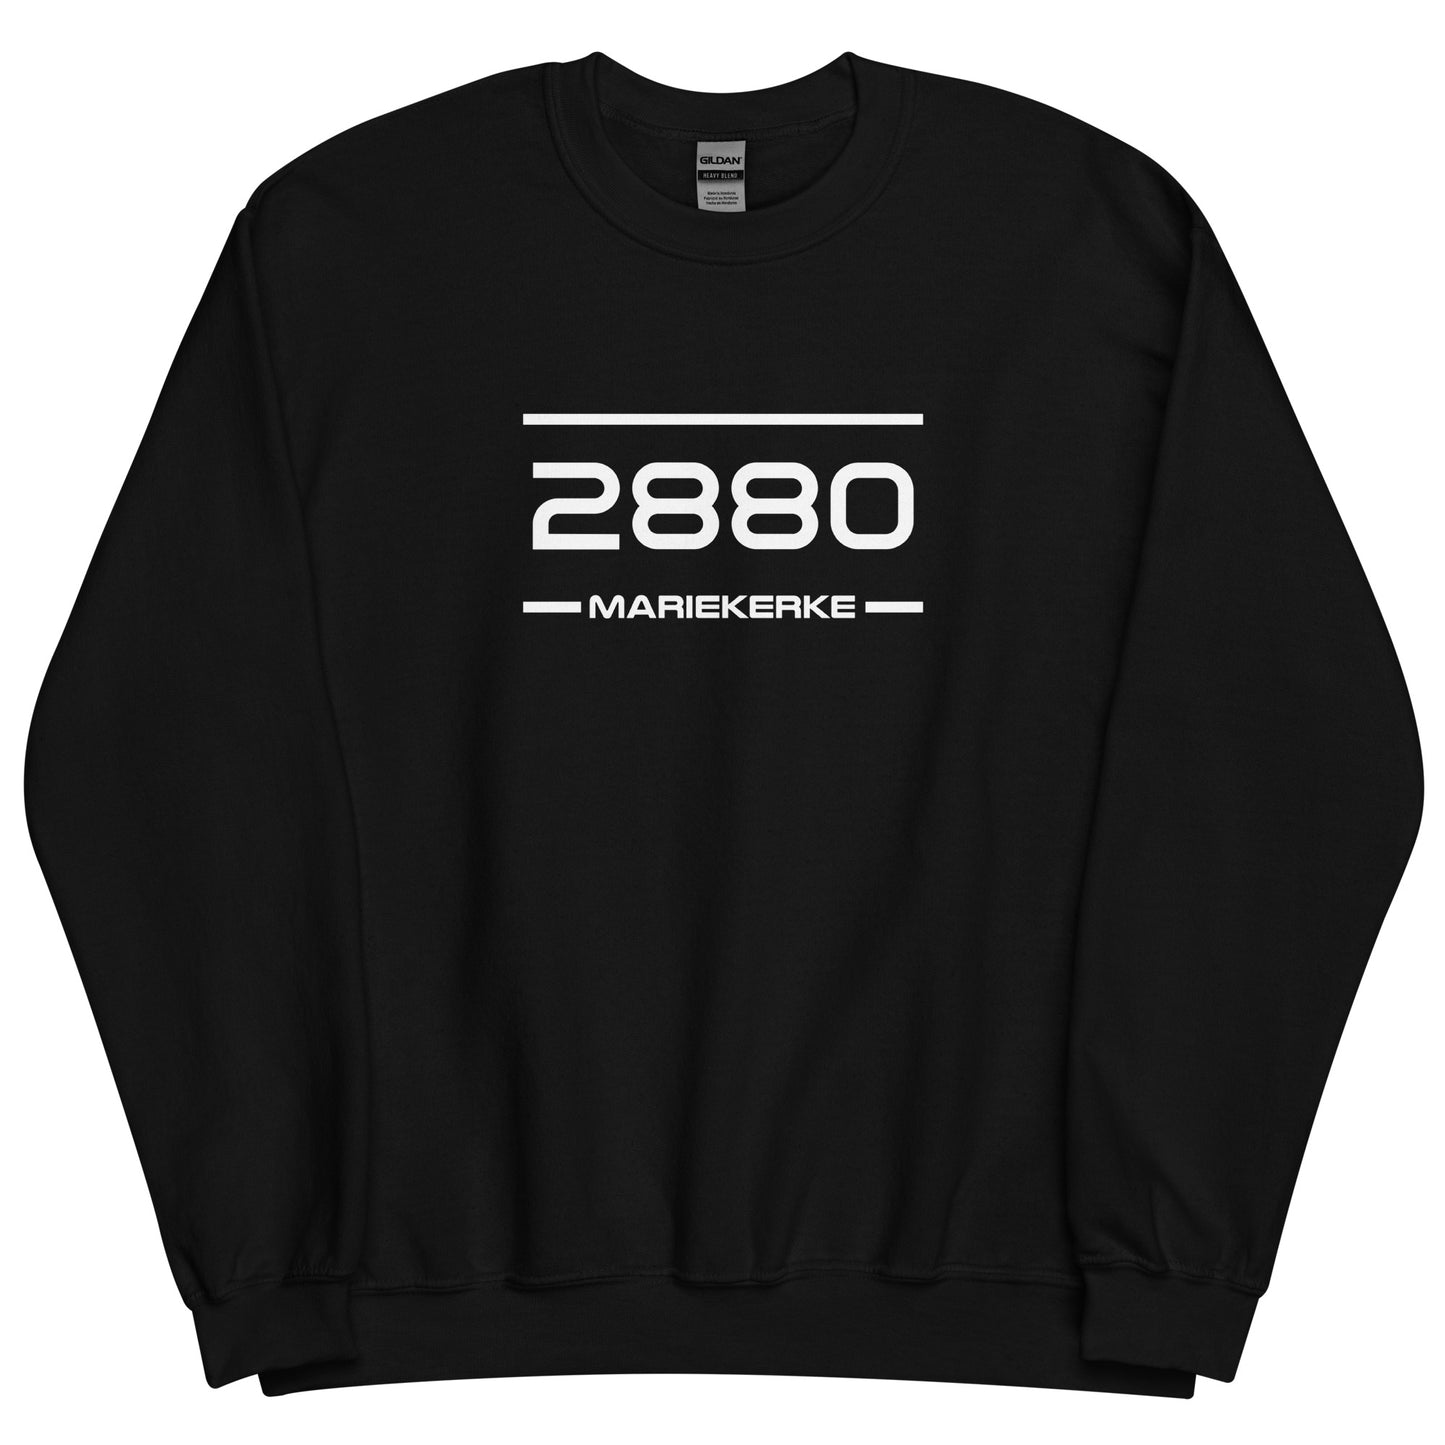 Sweater - 2880 - Mariekerke (M/V)